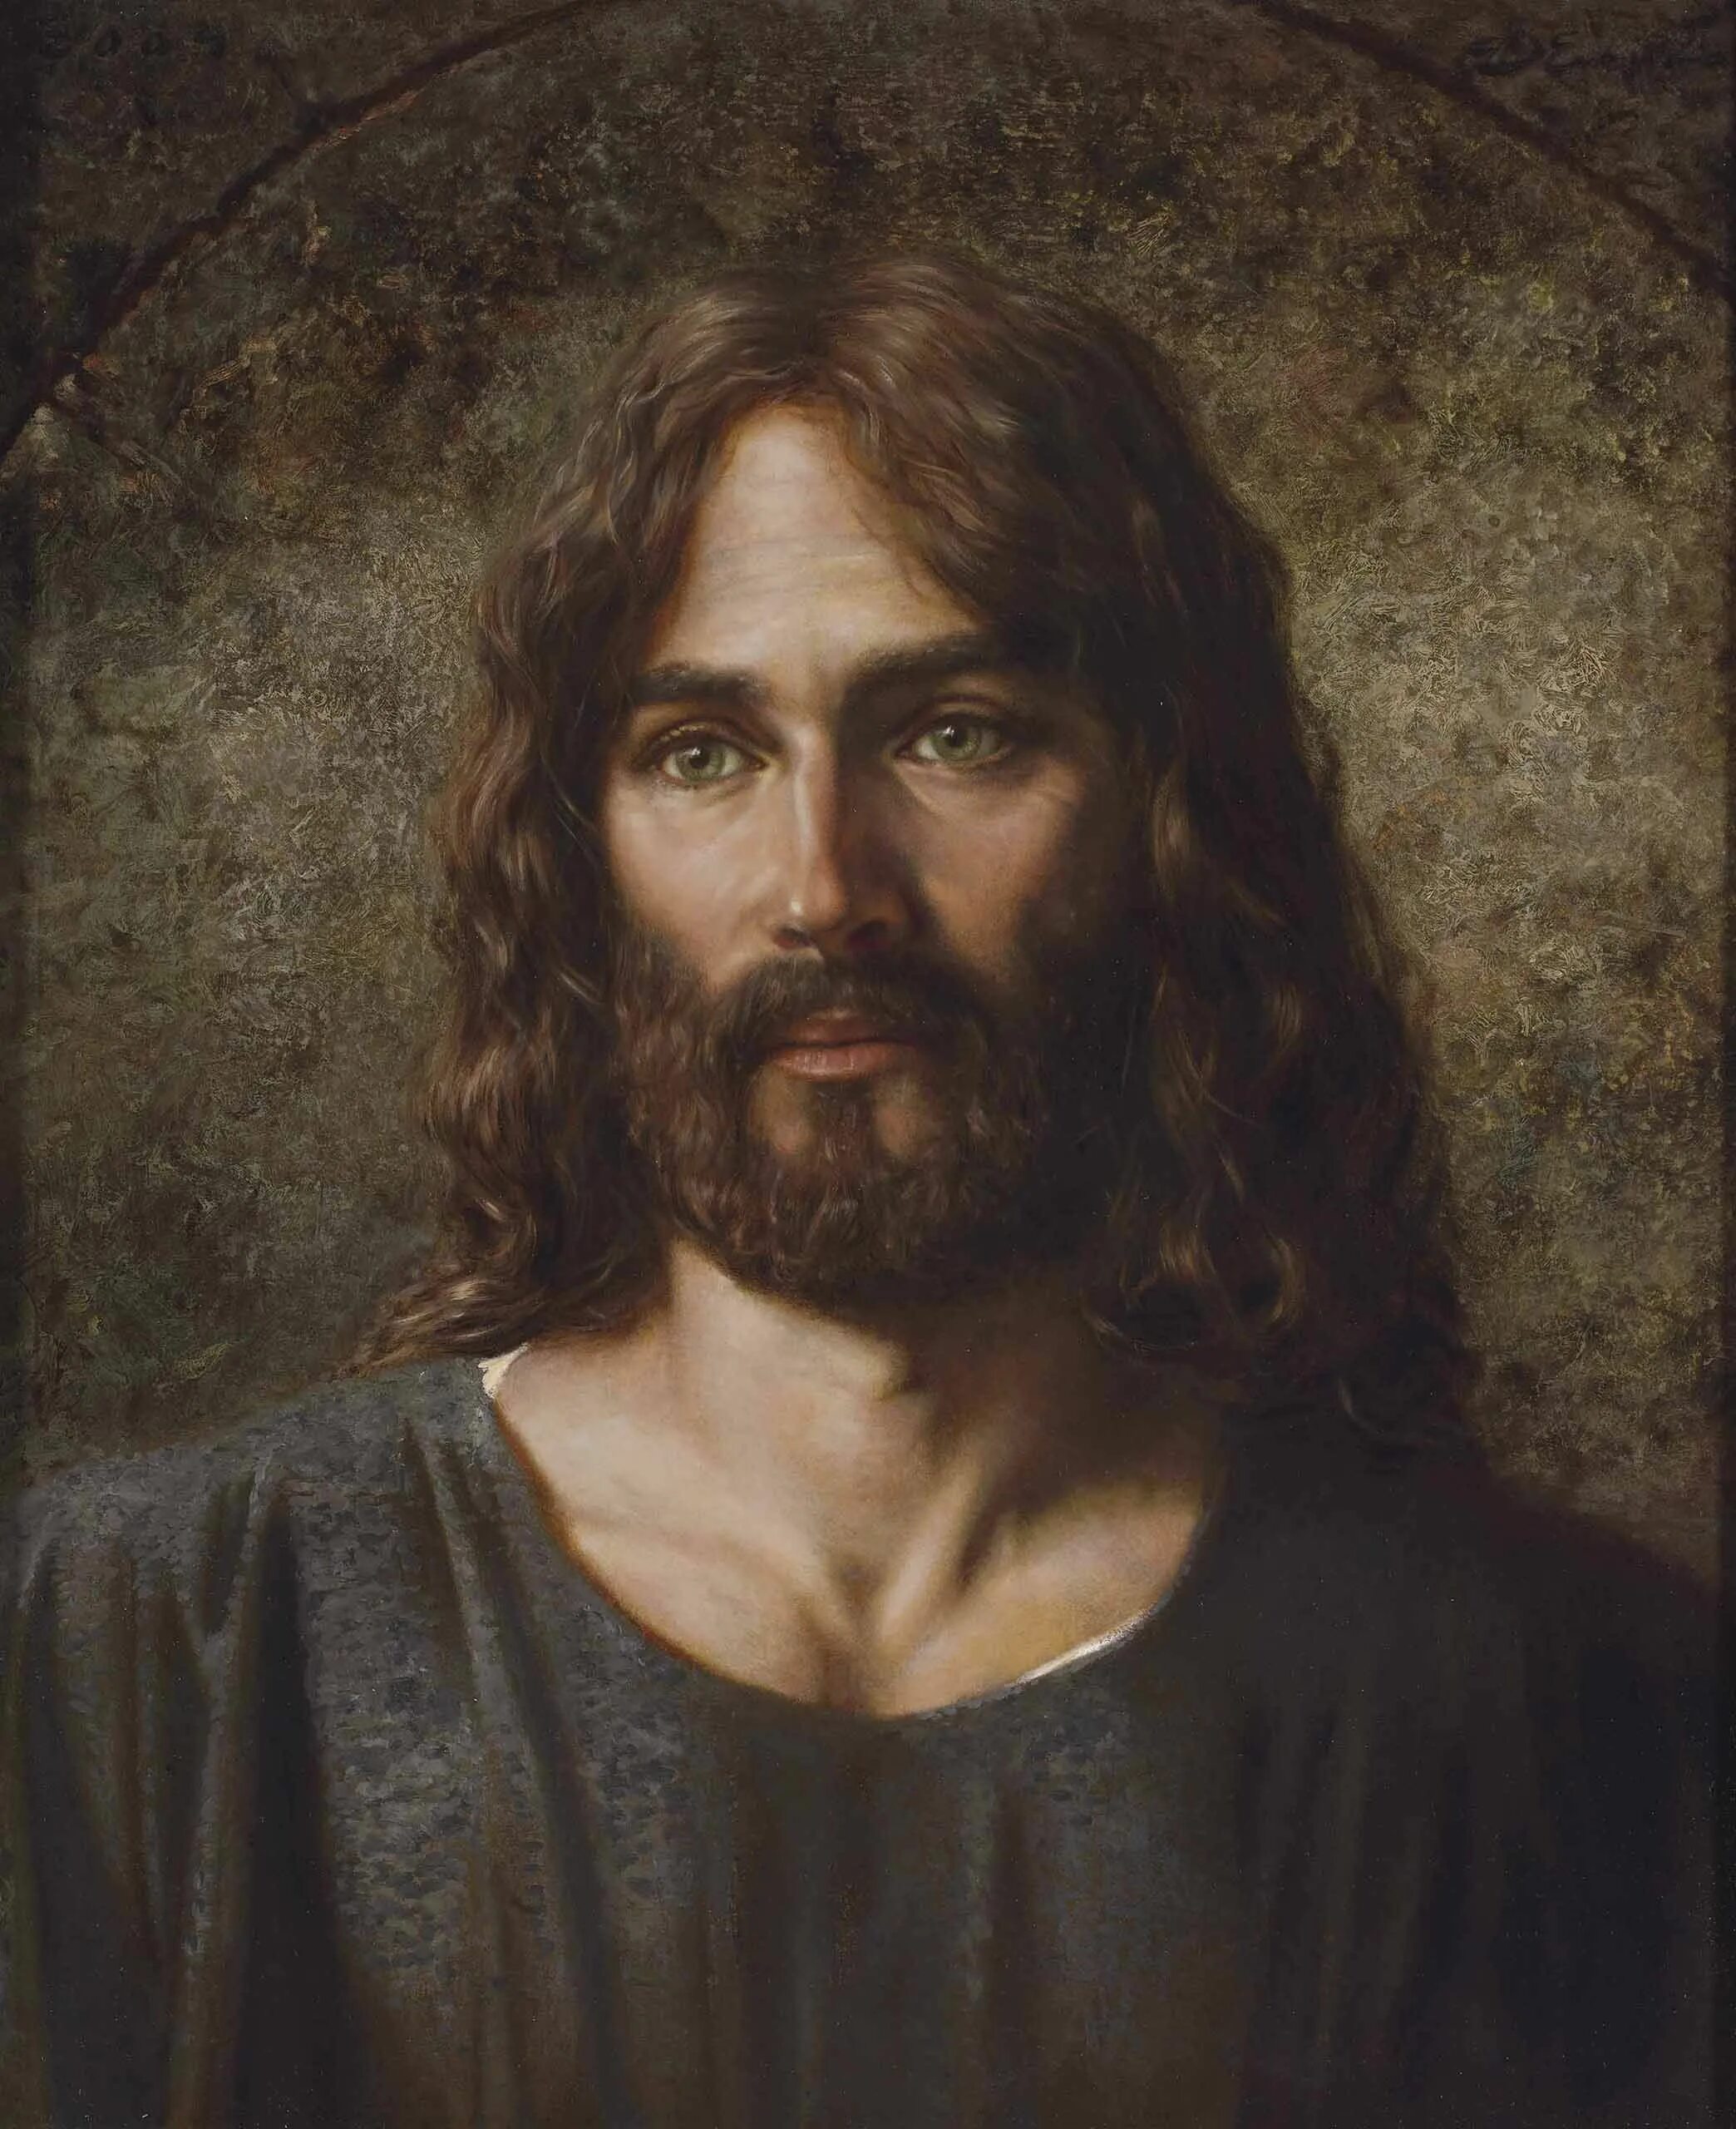 Христос реален. Портрет Иисуса Христа. Портрет Иисуса Христа мой Судия. Трагичный портрет Иисуса Христа. Образ Христа в живописи.